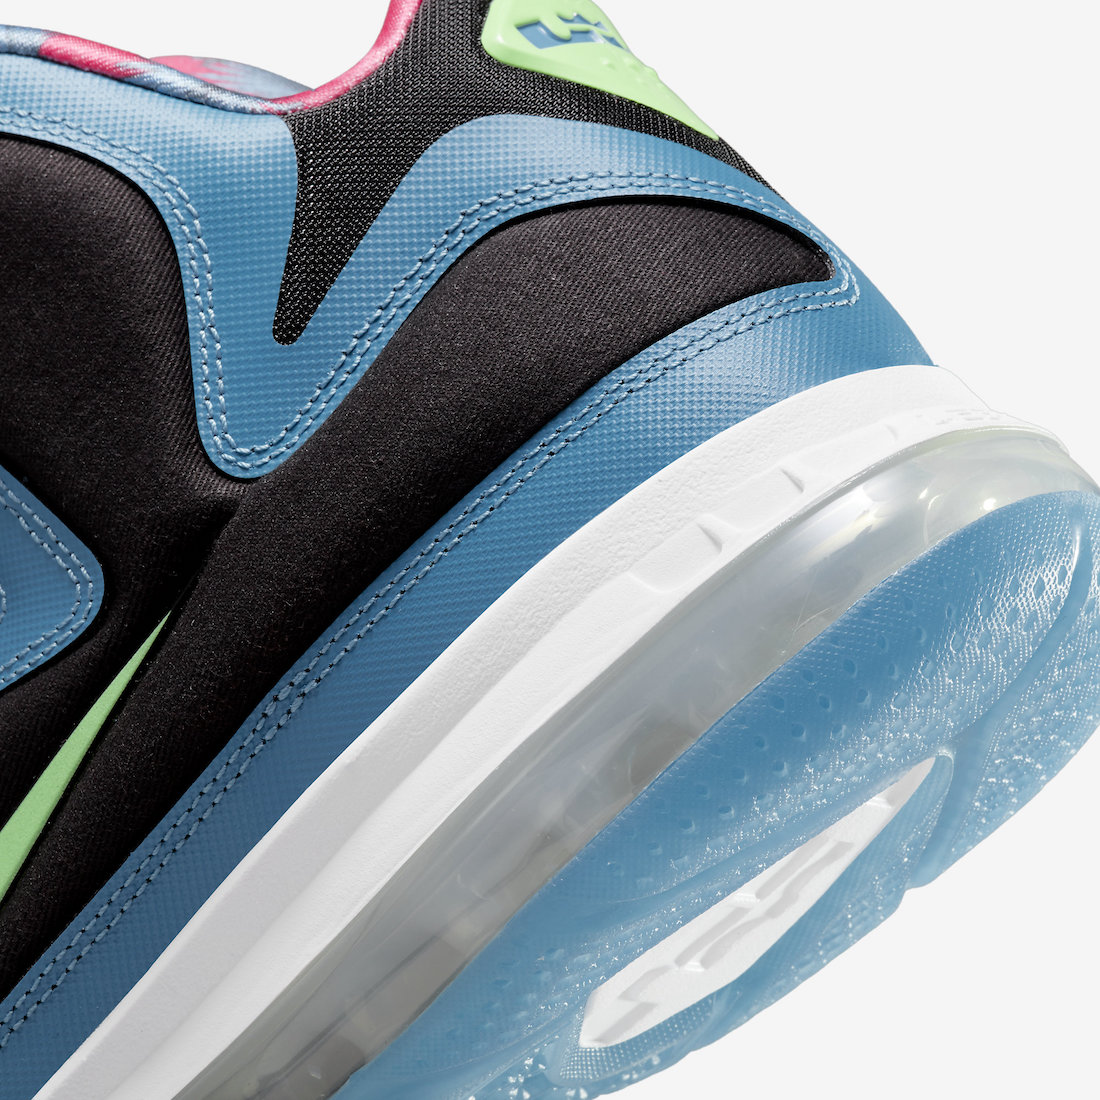 Nike-LeBron-9-South-Coast-DO5838-001-Release-Date-7